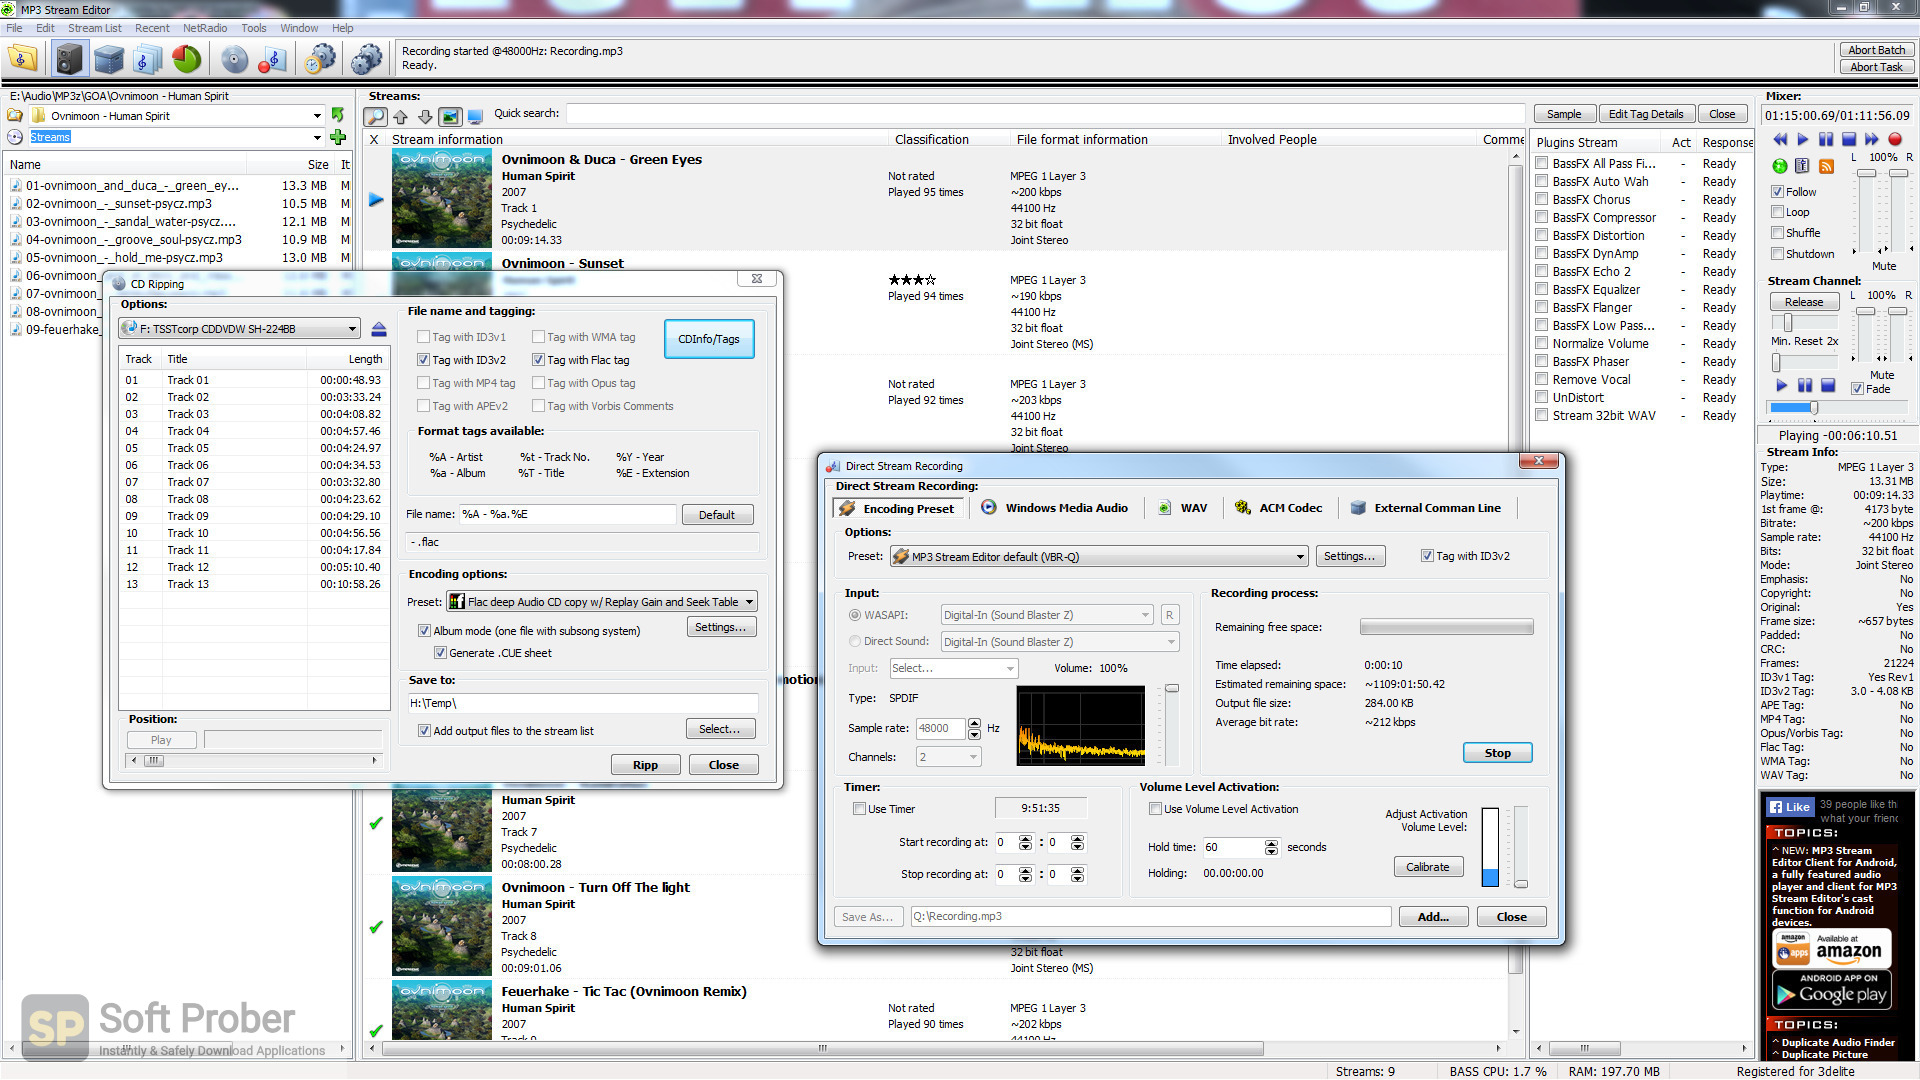 instal the last version for windows 3delite Audio File Browser 1.0.45.74